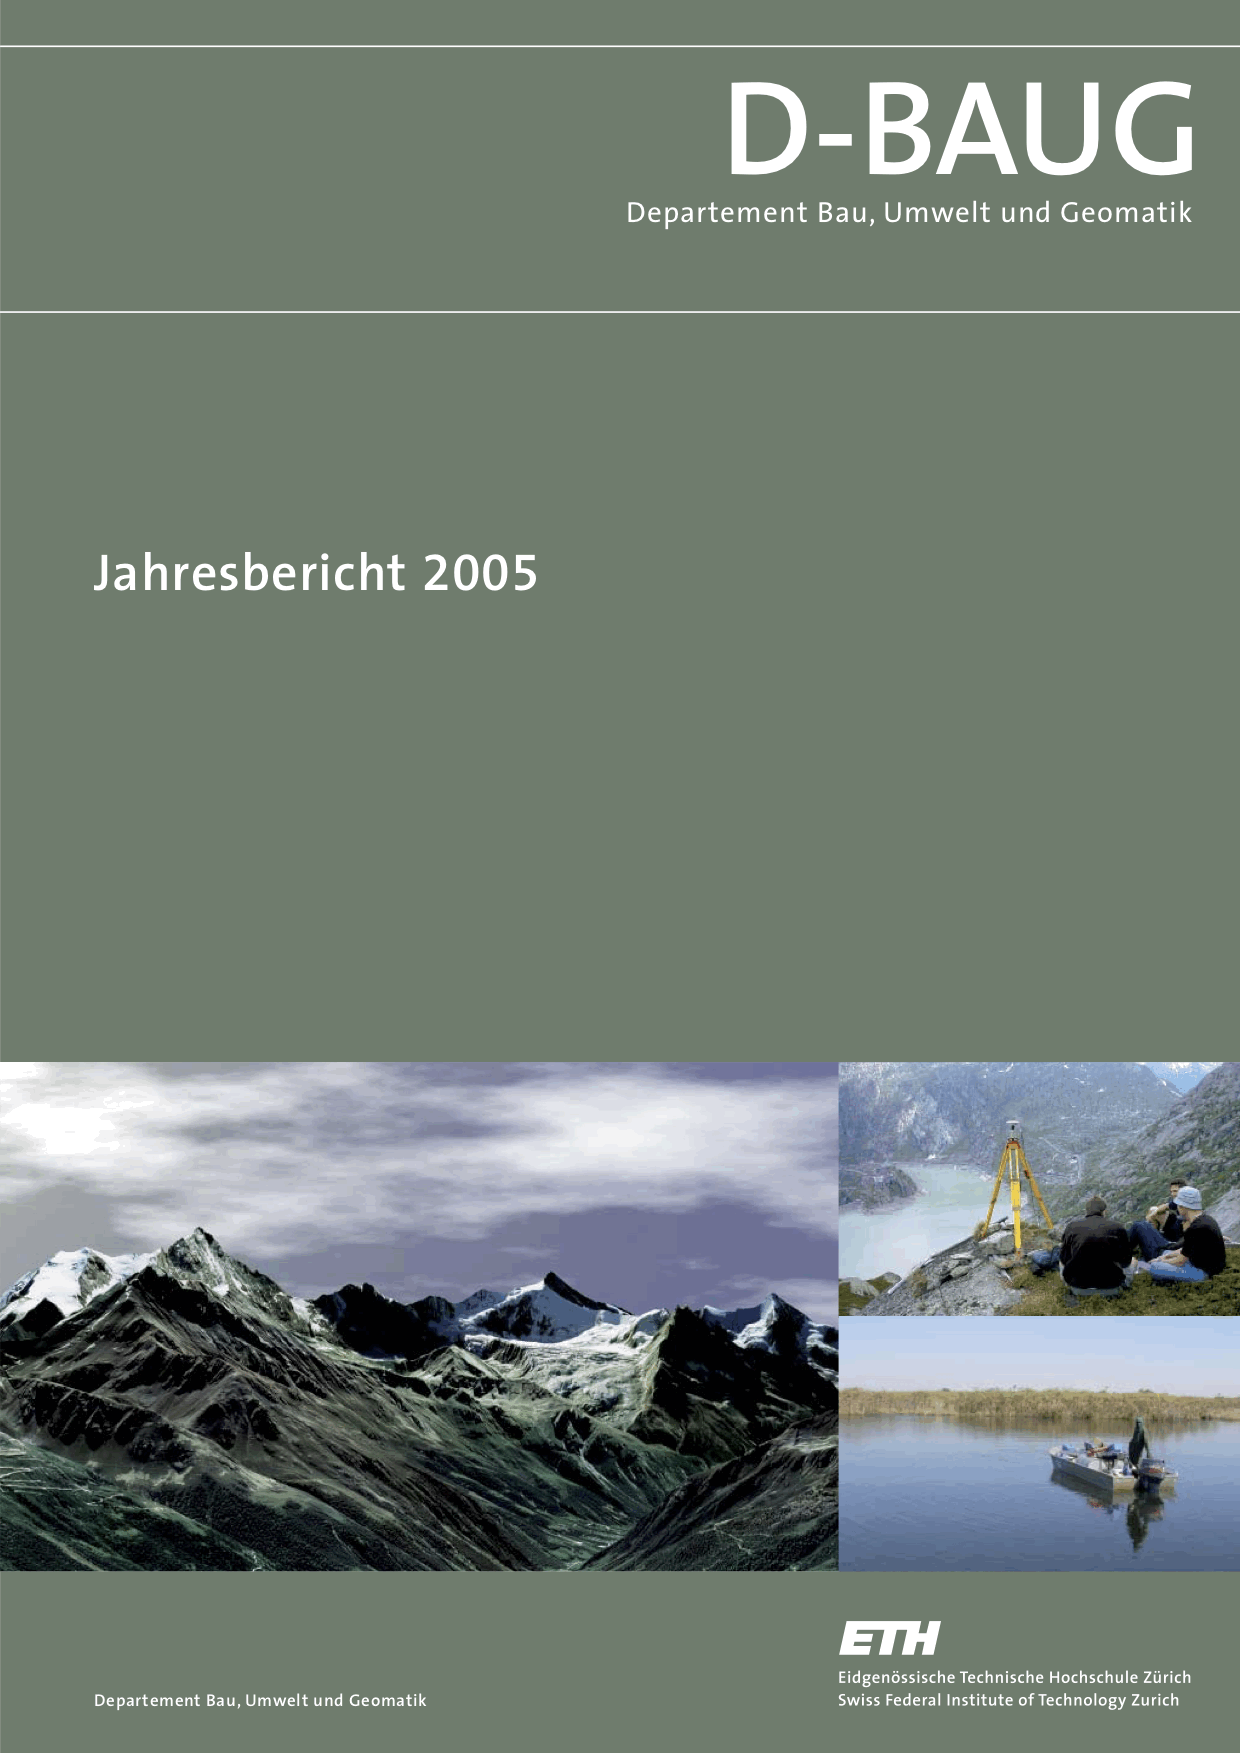 D-BAUG Jahresbericht 2005